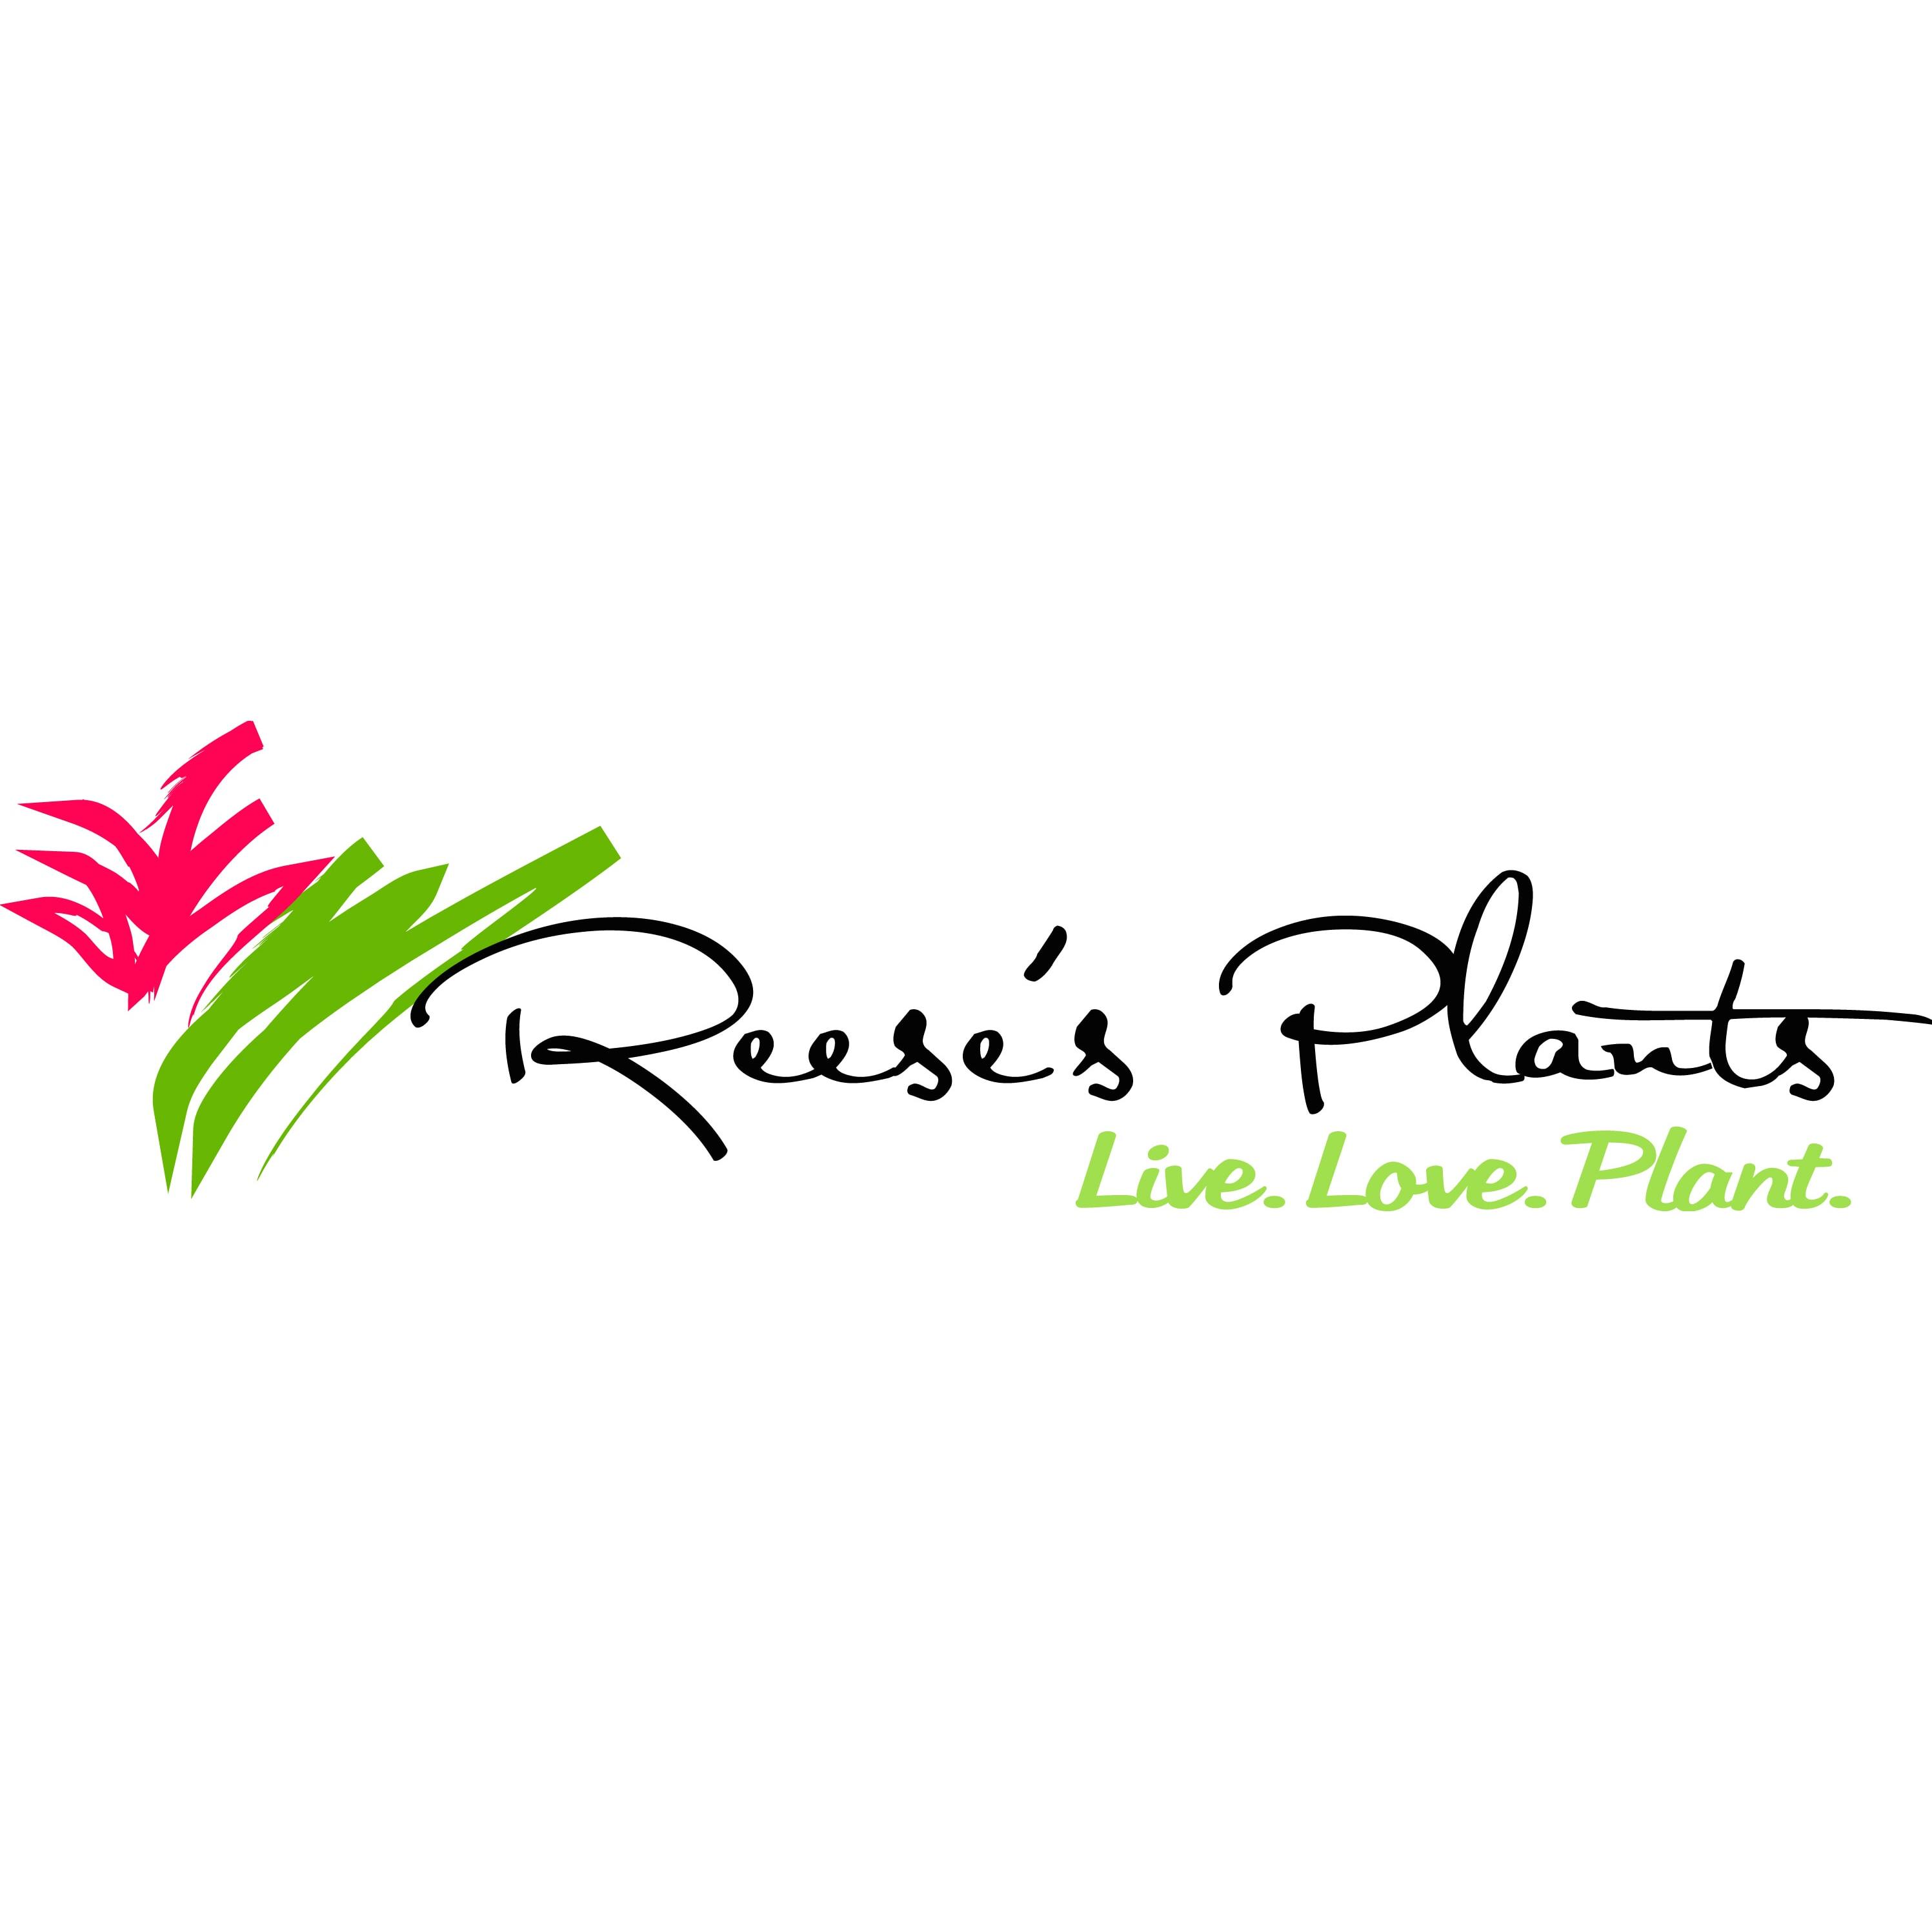 Reese's Plants Logo